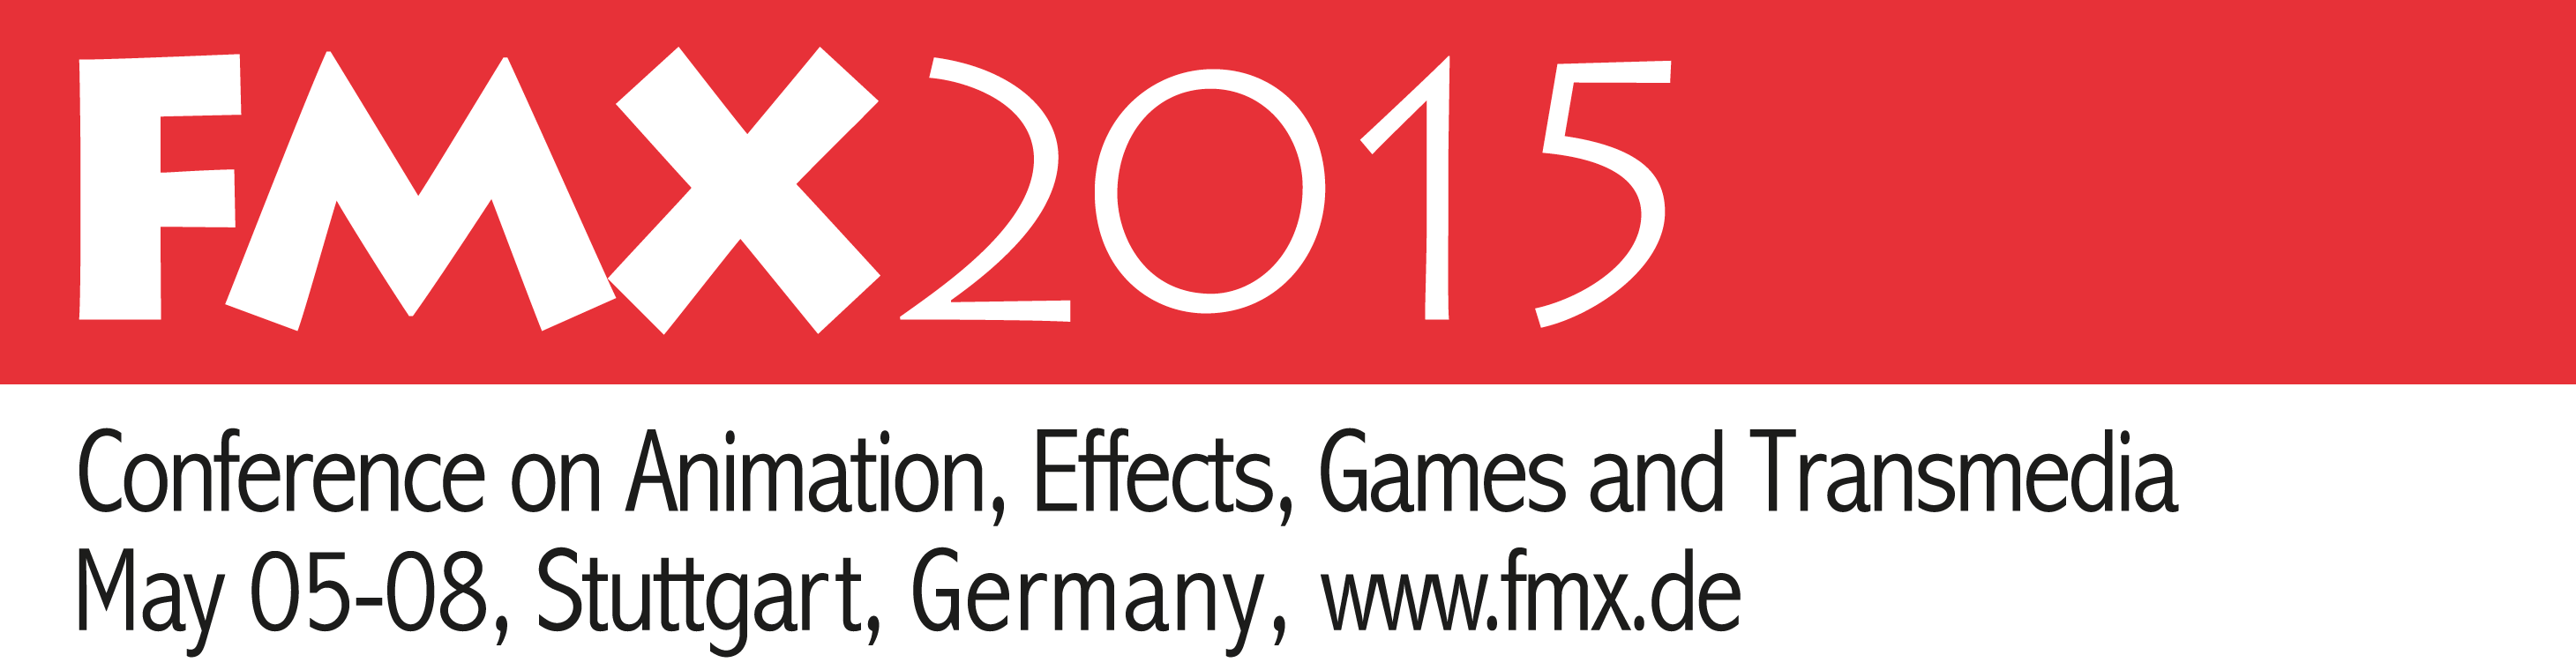 FMX-2015_Logo_All-Infos_black-type